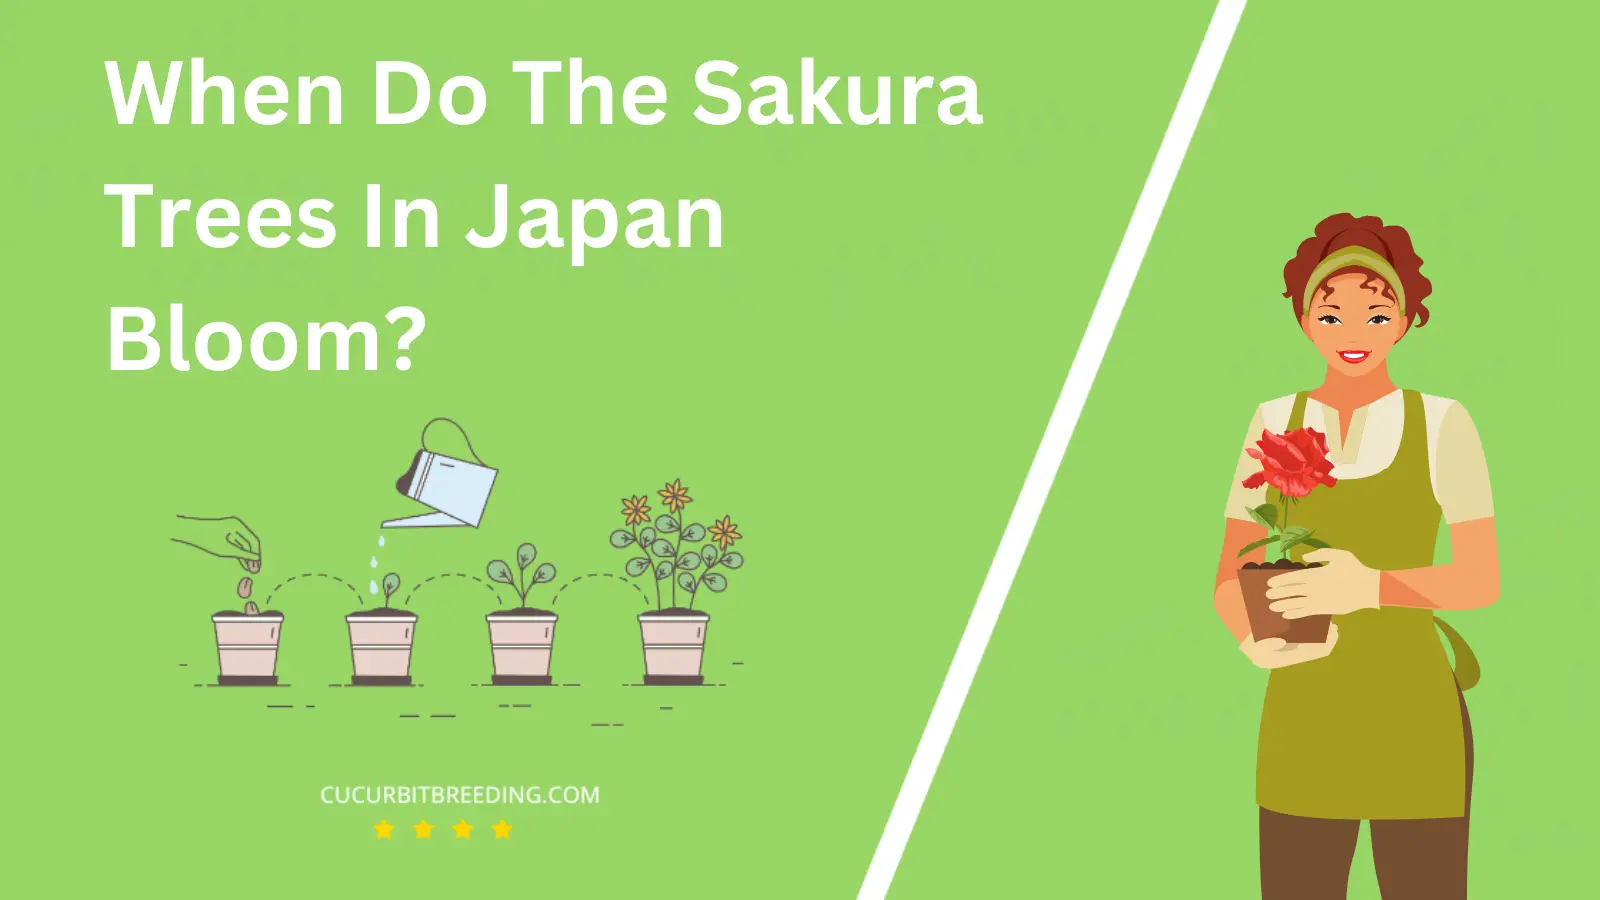 When Do The Sakura Trees In Japan Bloom?